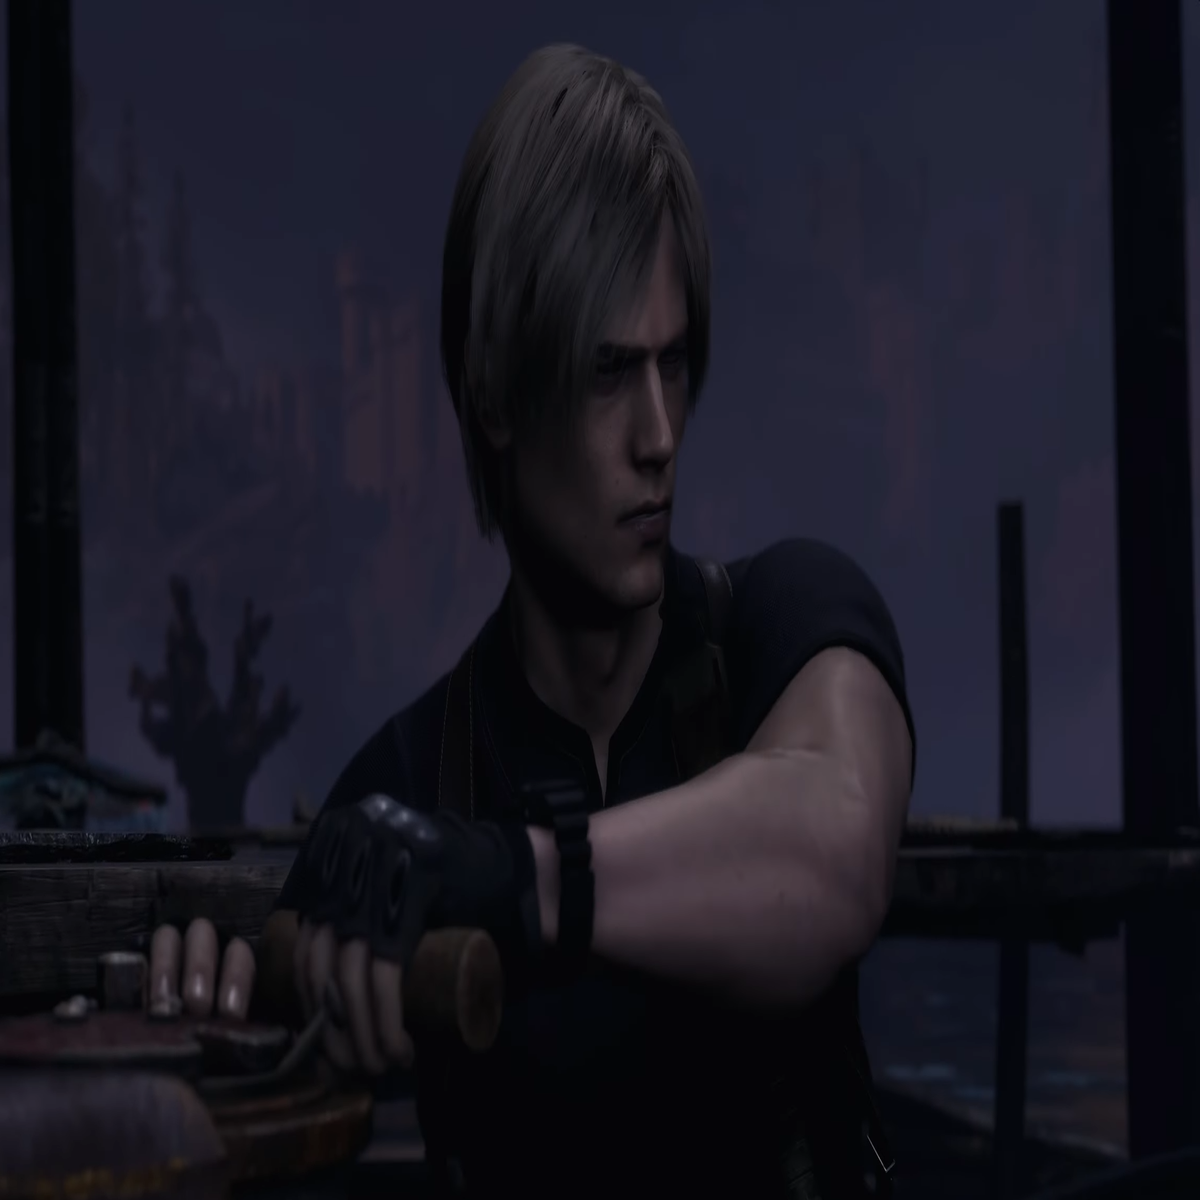 Comprar Resident Evil 4 Remake - Steam 